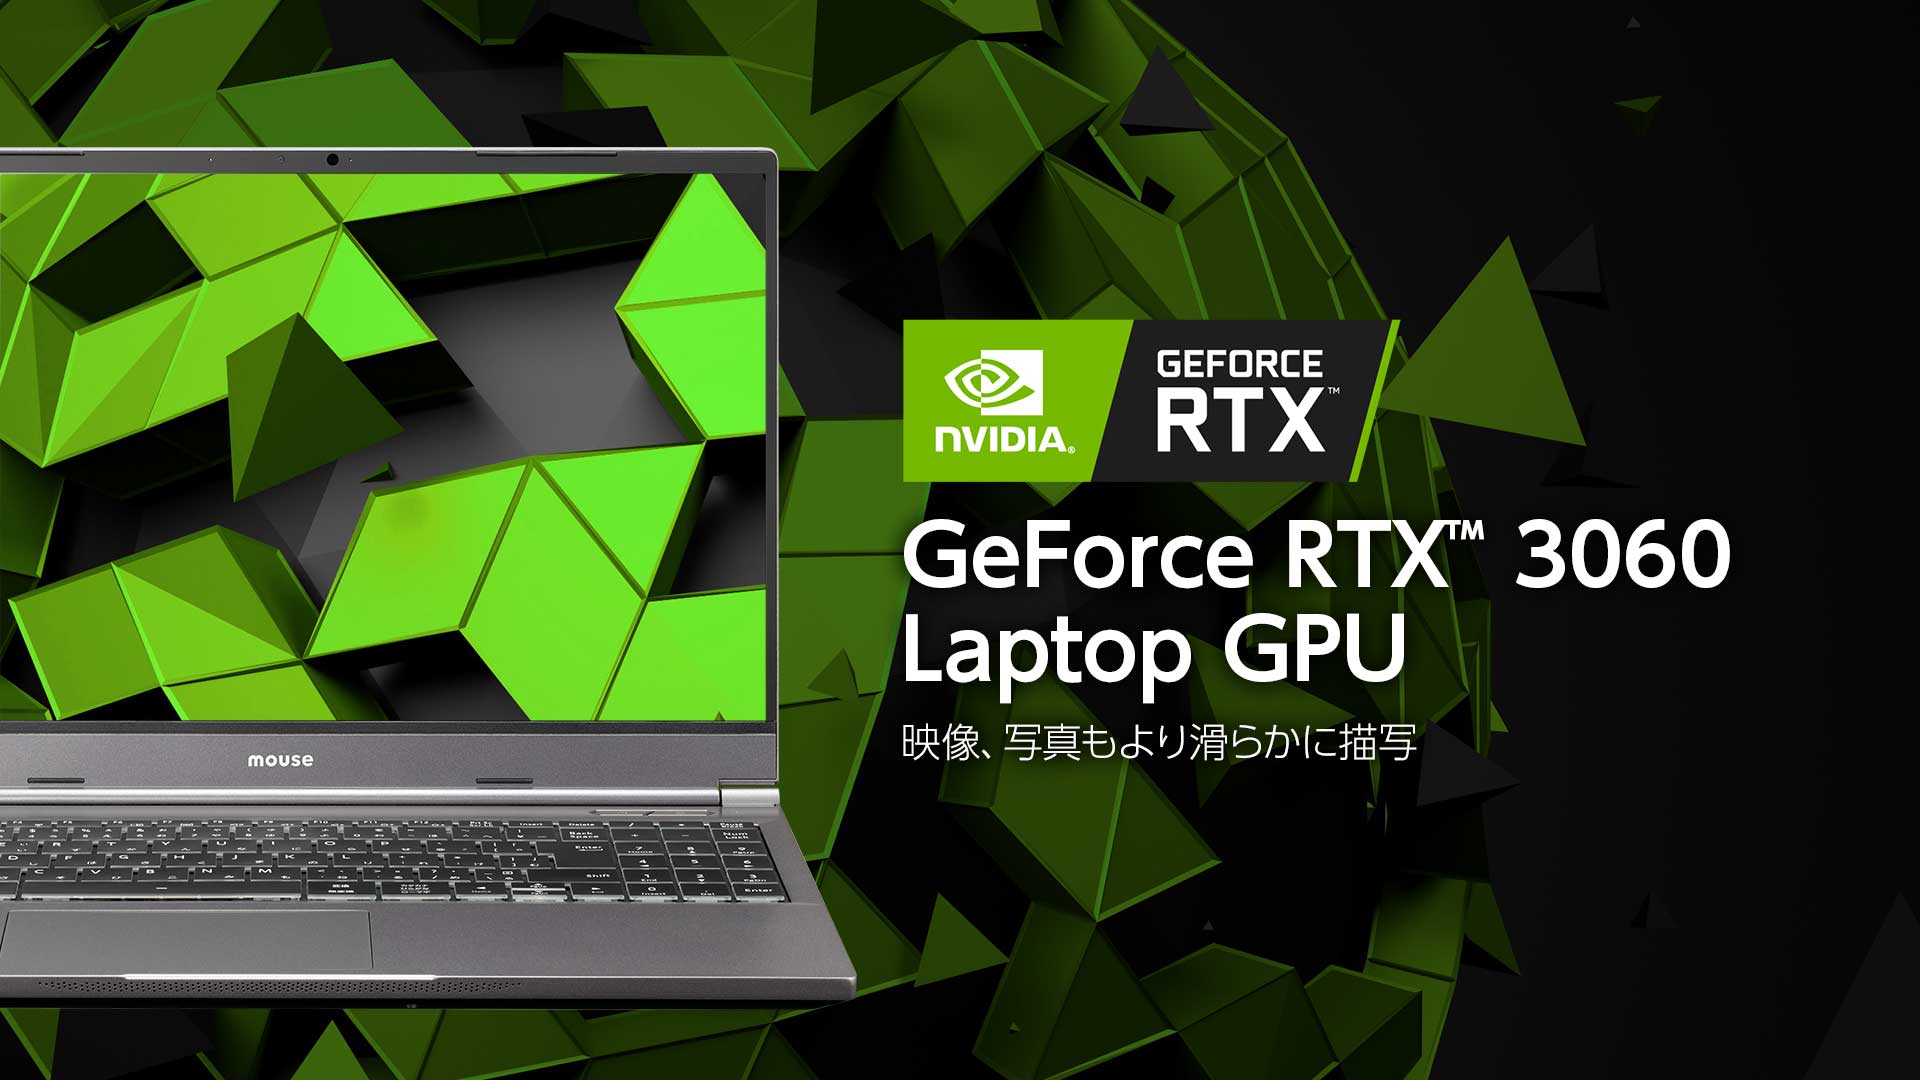 NVIDIA GeForce RTX 3060 Laptop GPU